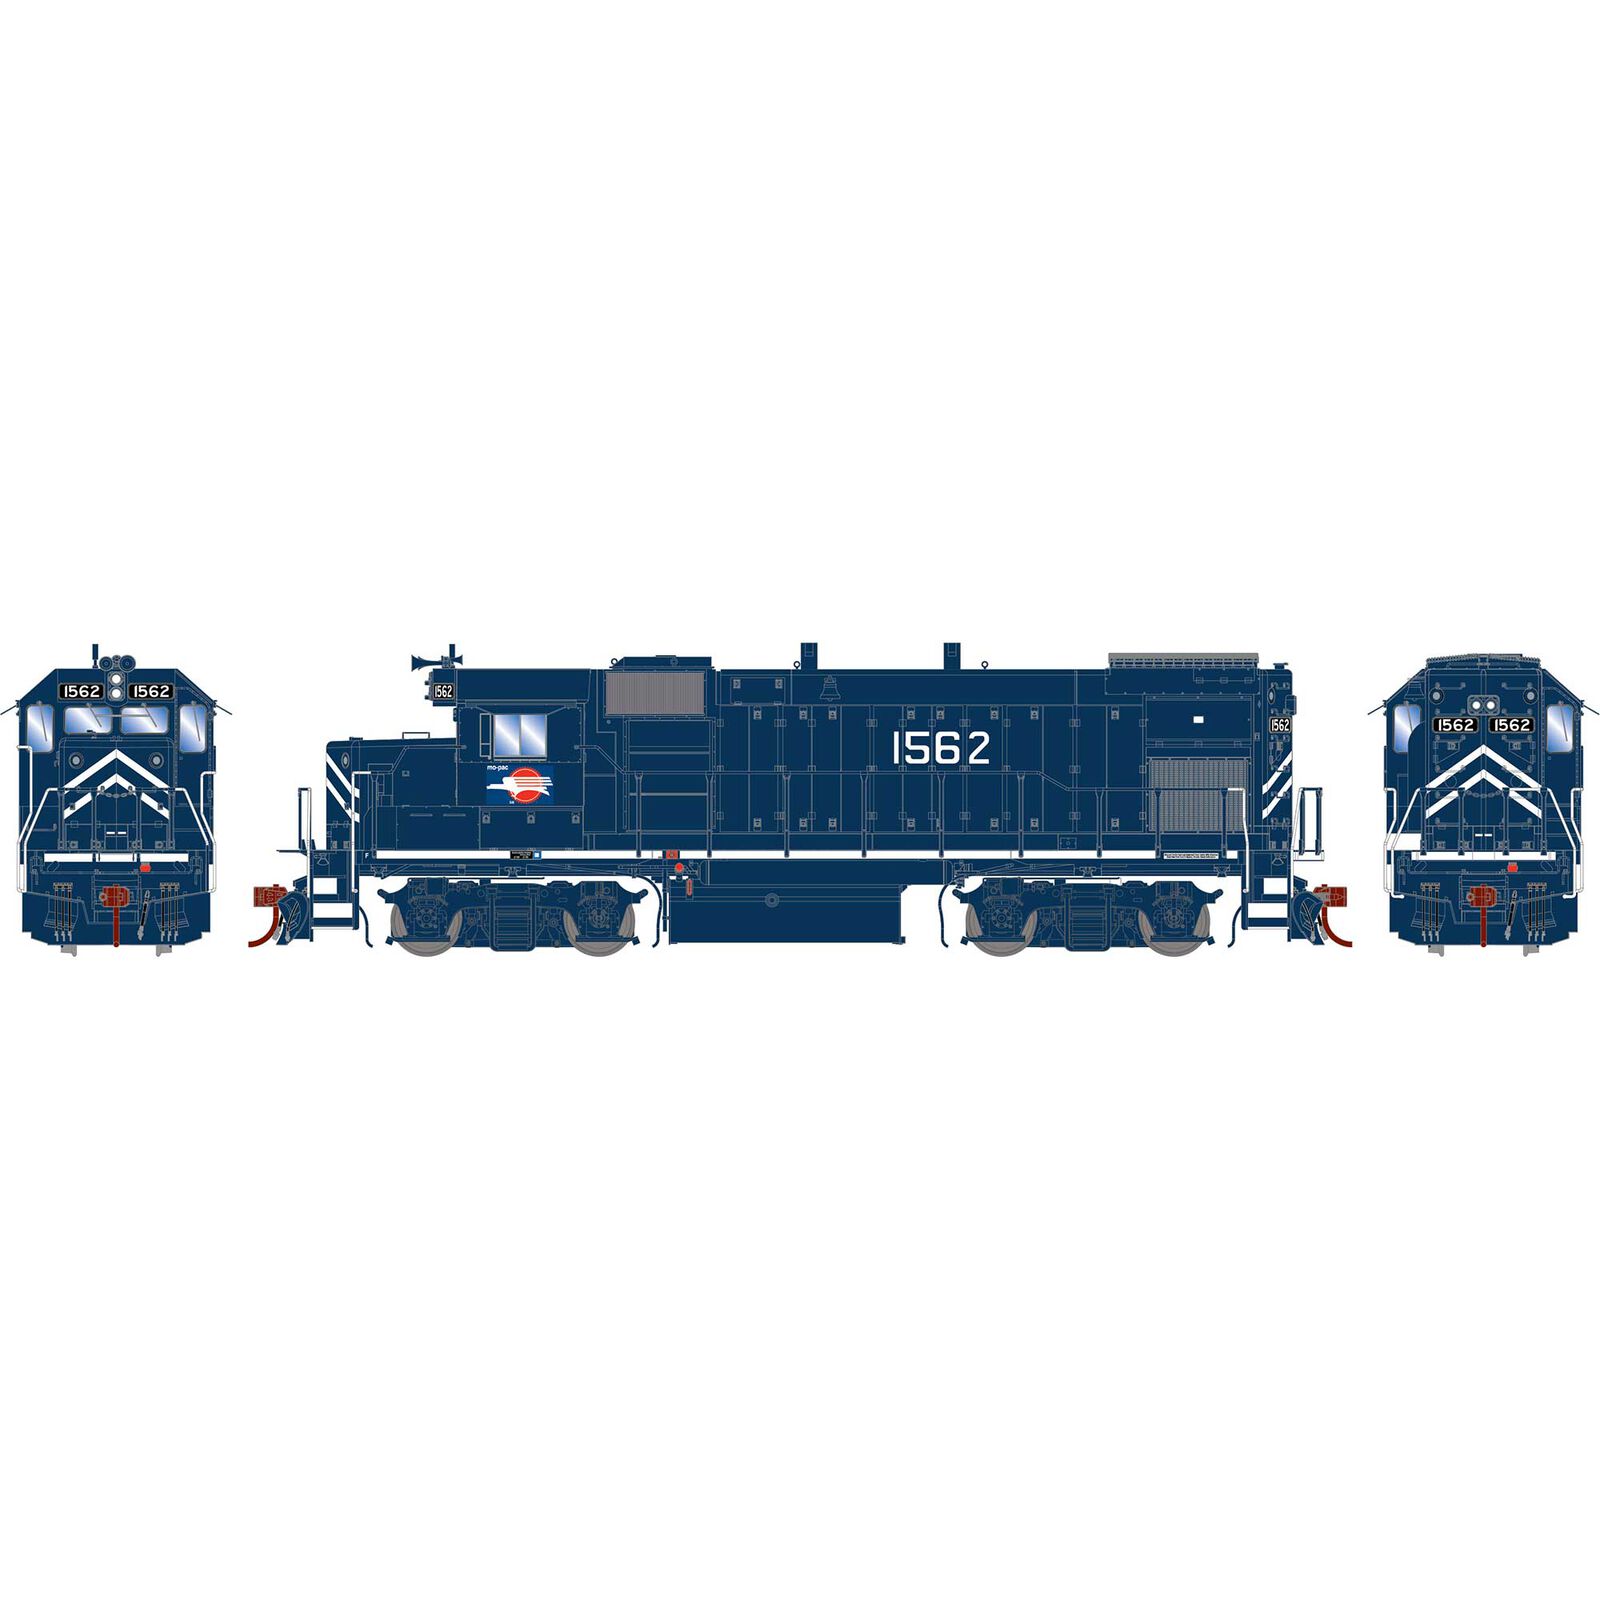 HO GP15-1 Locomotive with DCC & Sound, Missouri Pacific #1562